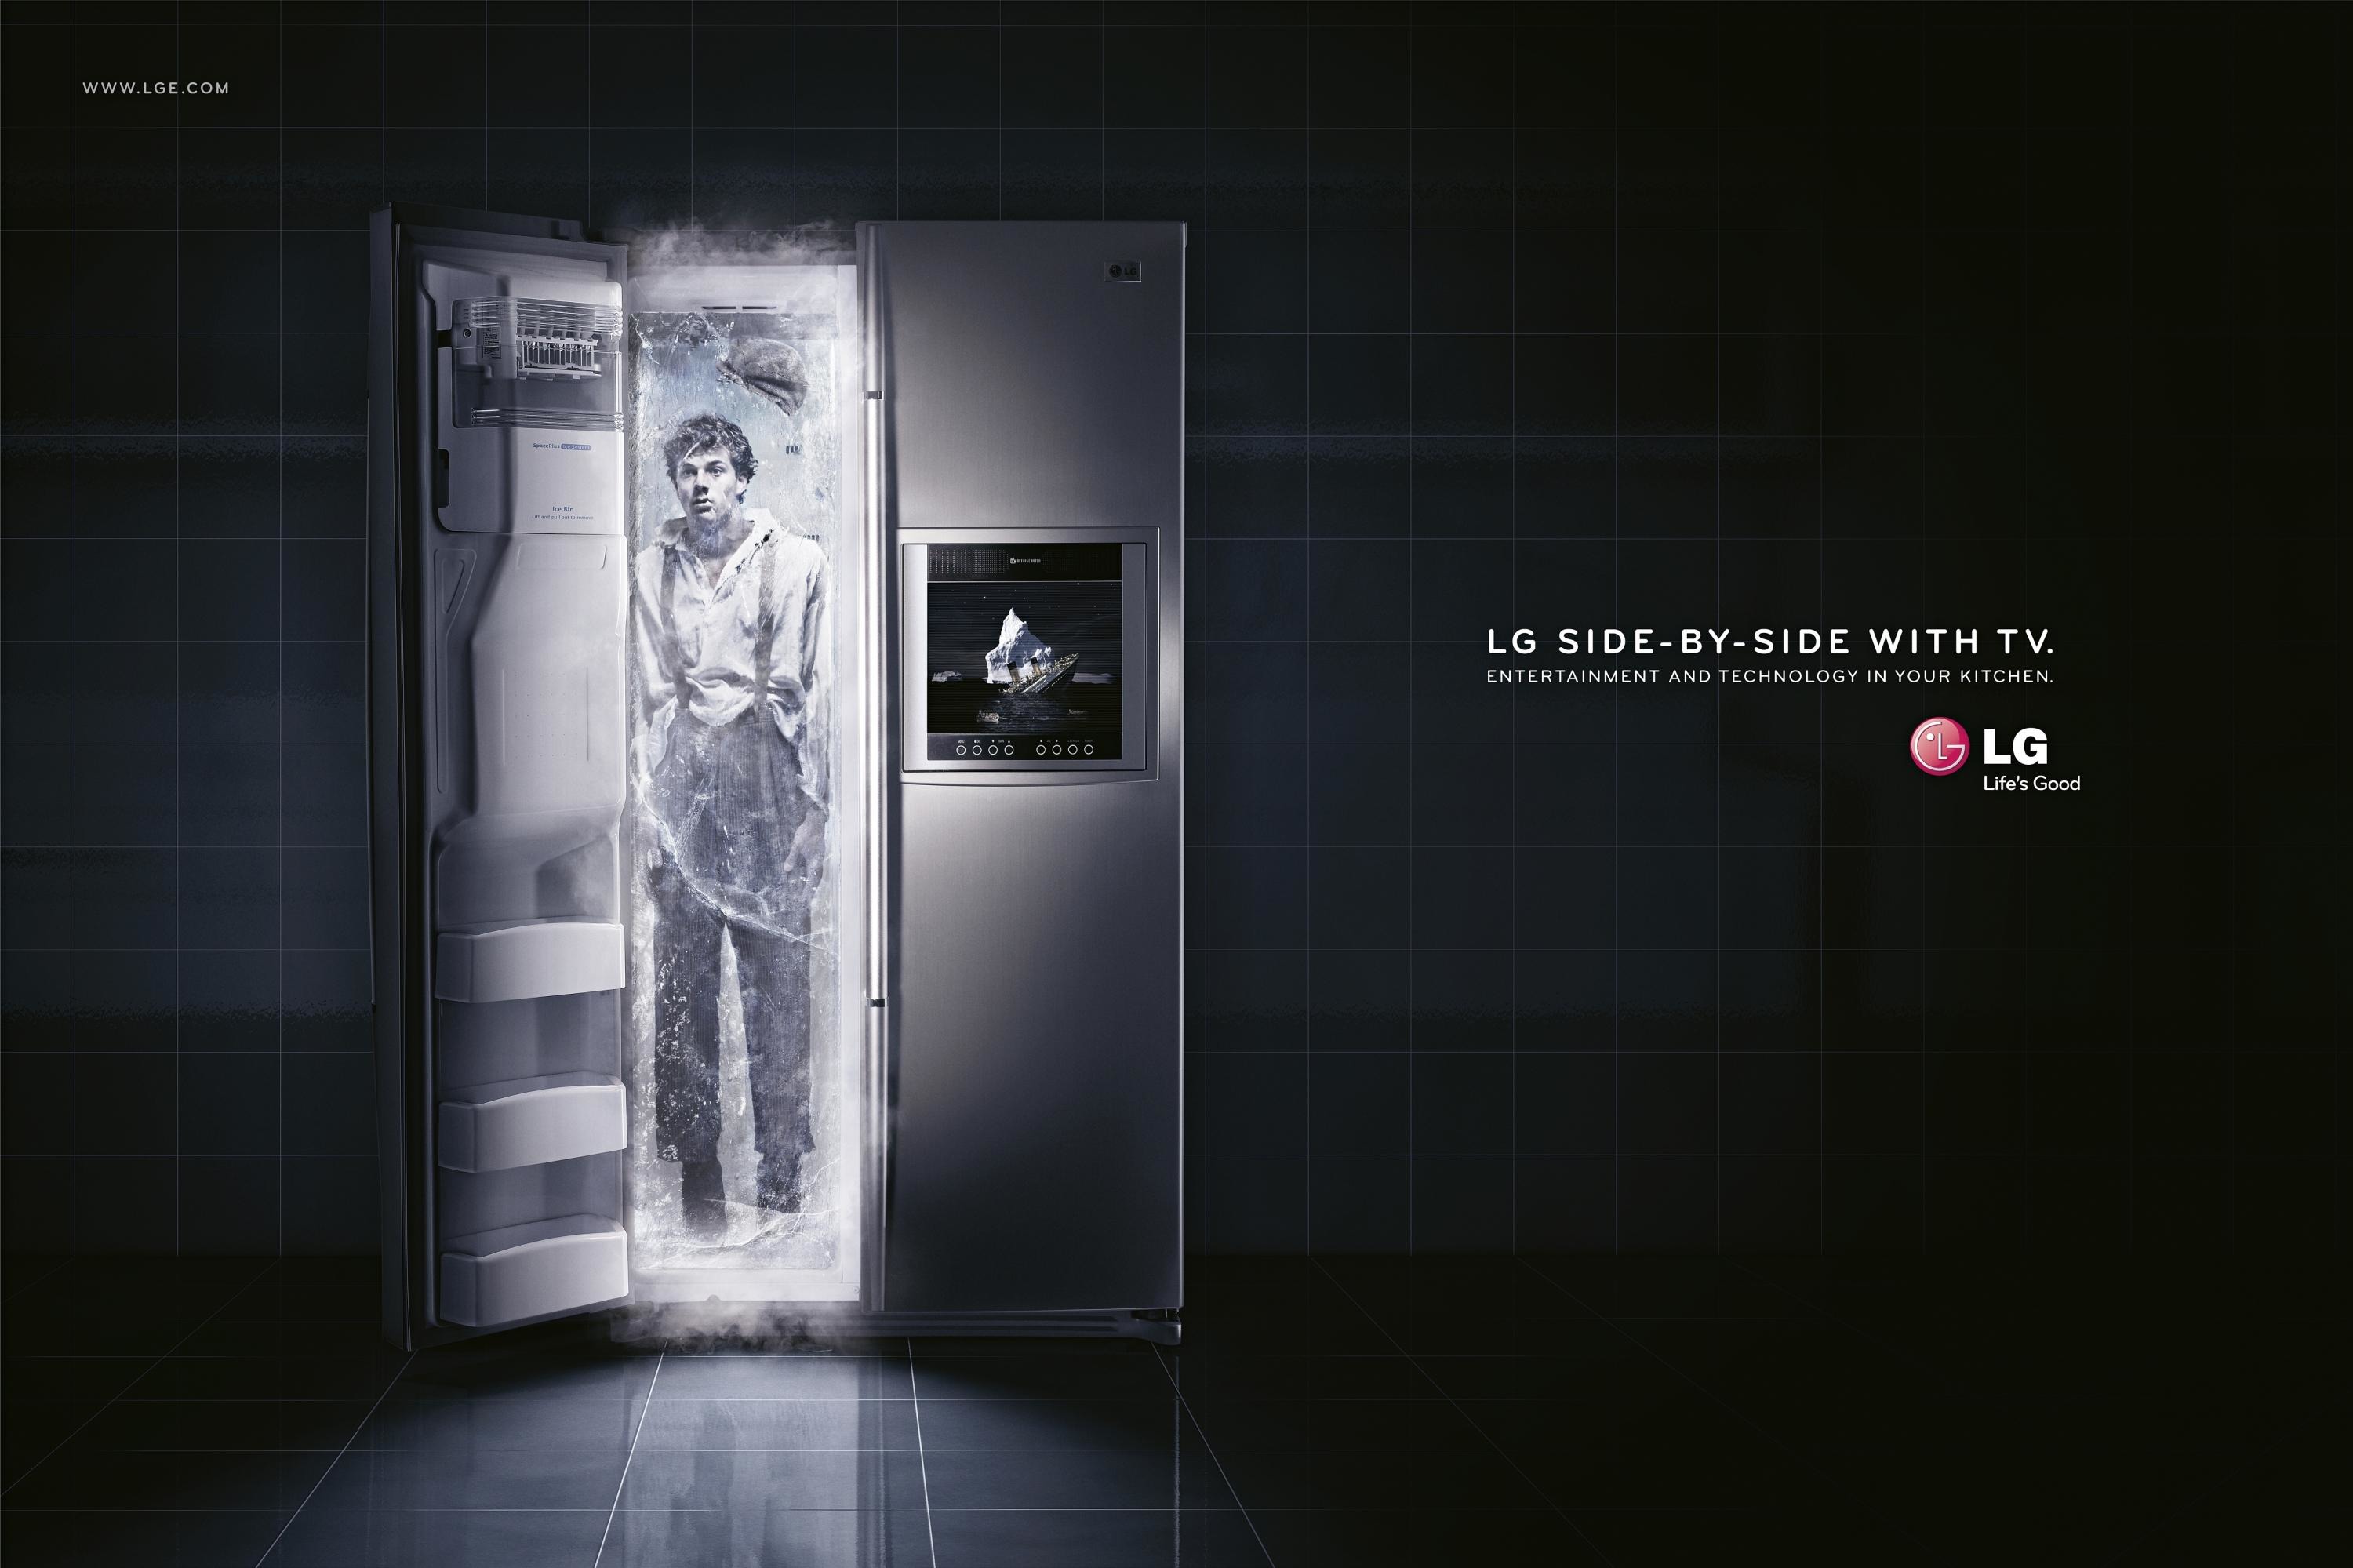 Всплывающая реклама на телефоне техно. Реклама холодильника. Креативная реклама. Реклама холодильника LG. Креативная реклама смартфонов.